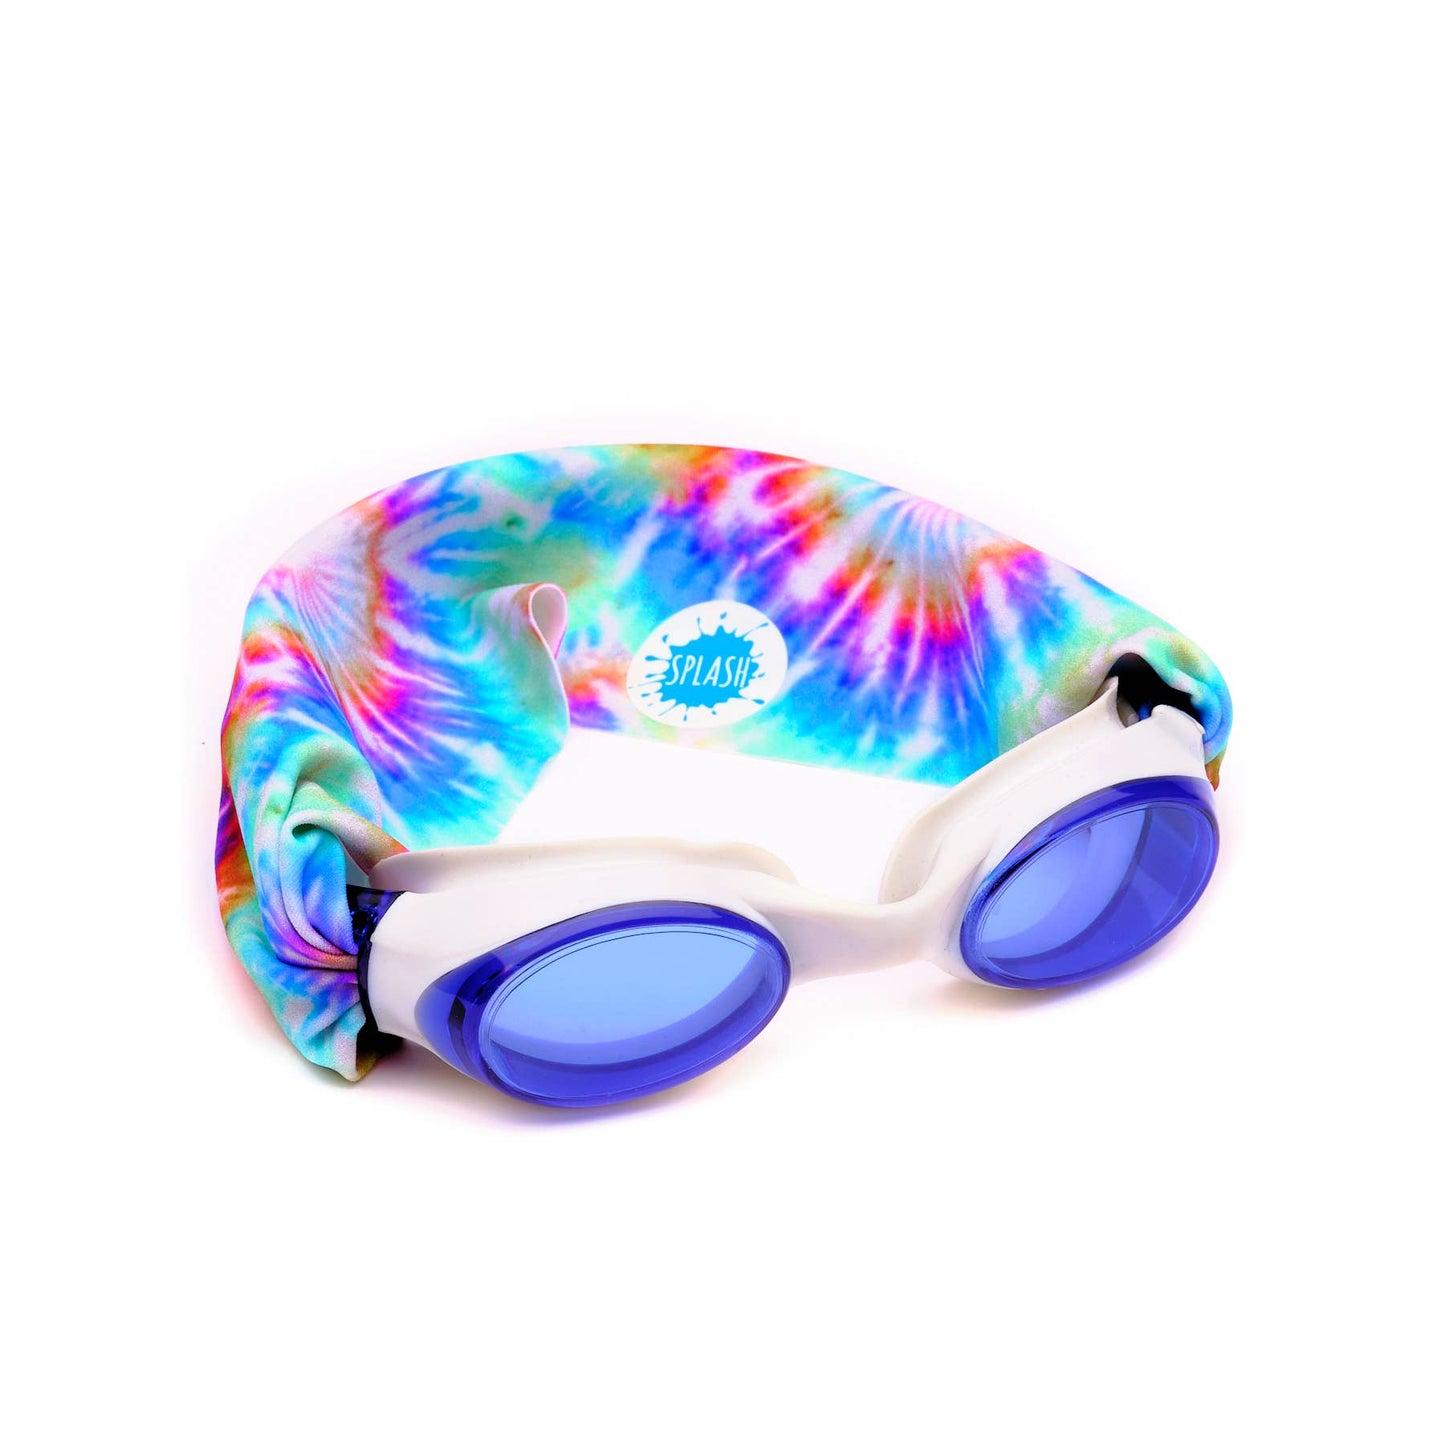 Splash Swim Goggles - Tie Dye Swim Goggles